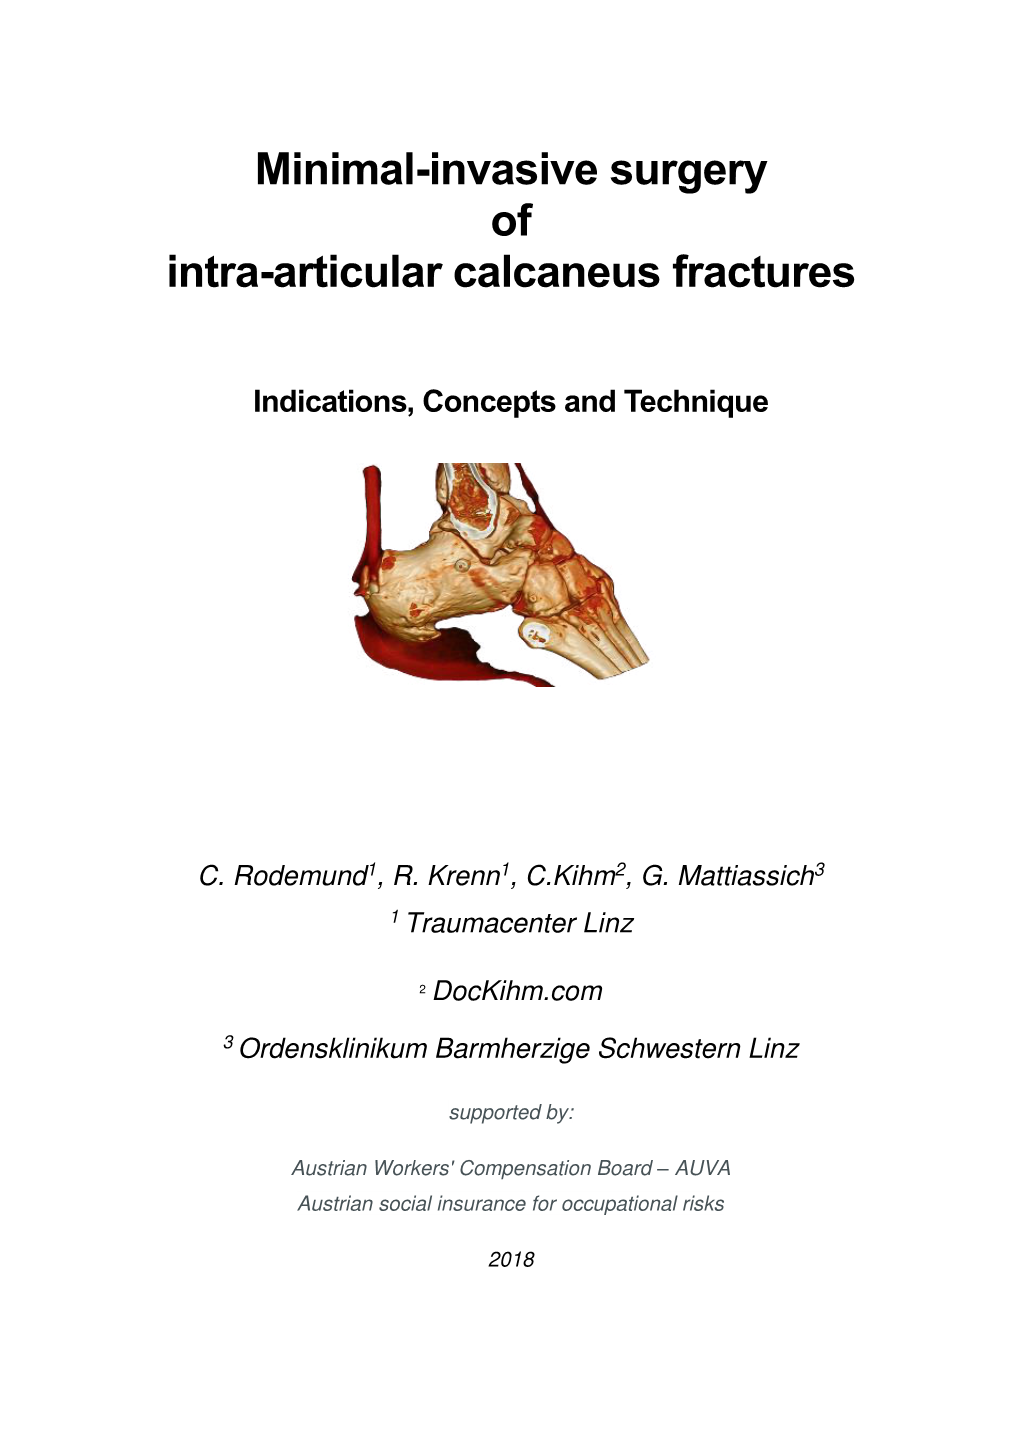 Minimal-Invasive Surgery of Intra-Articular Calcaneus Fractures